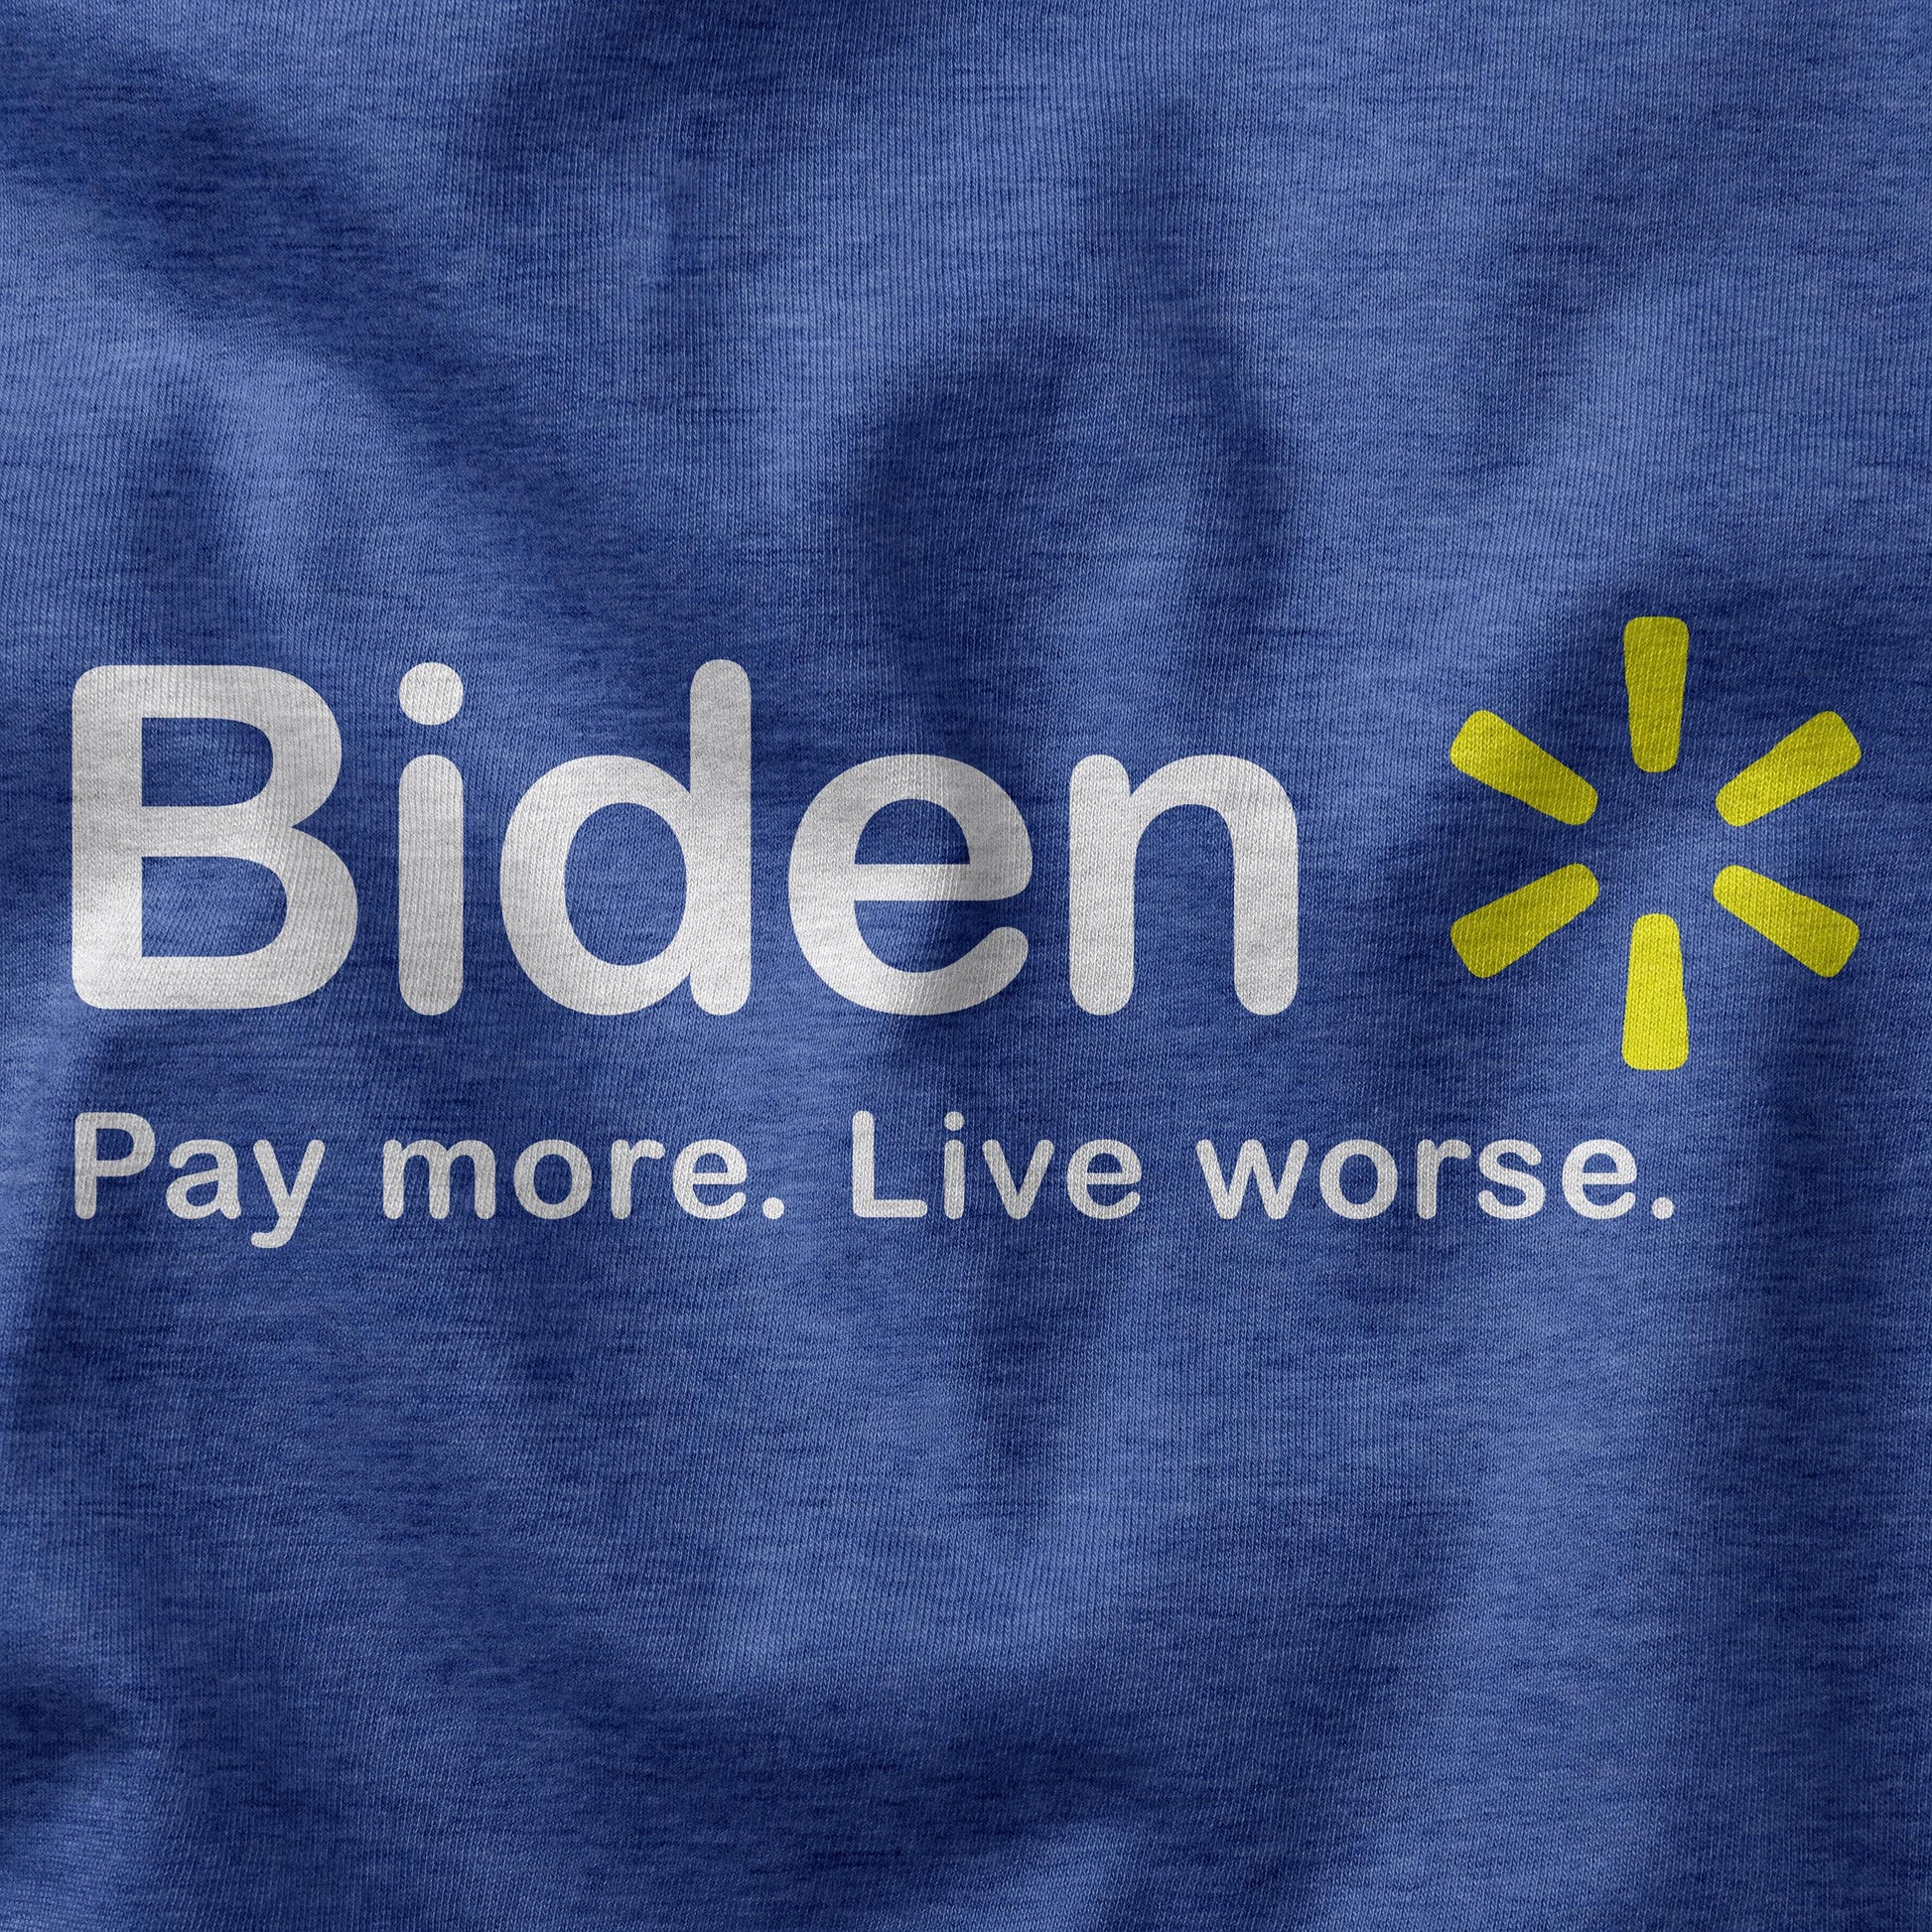 Joe Biden parody tees shirt closeup